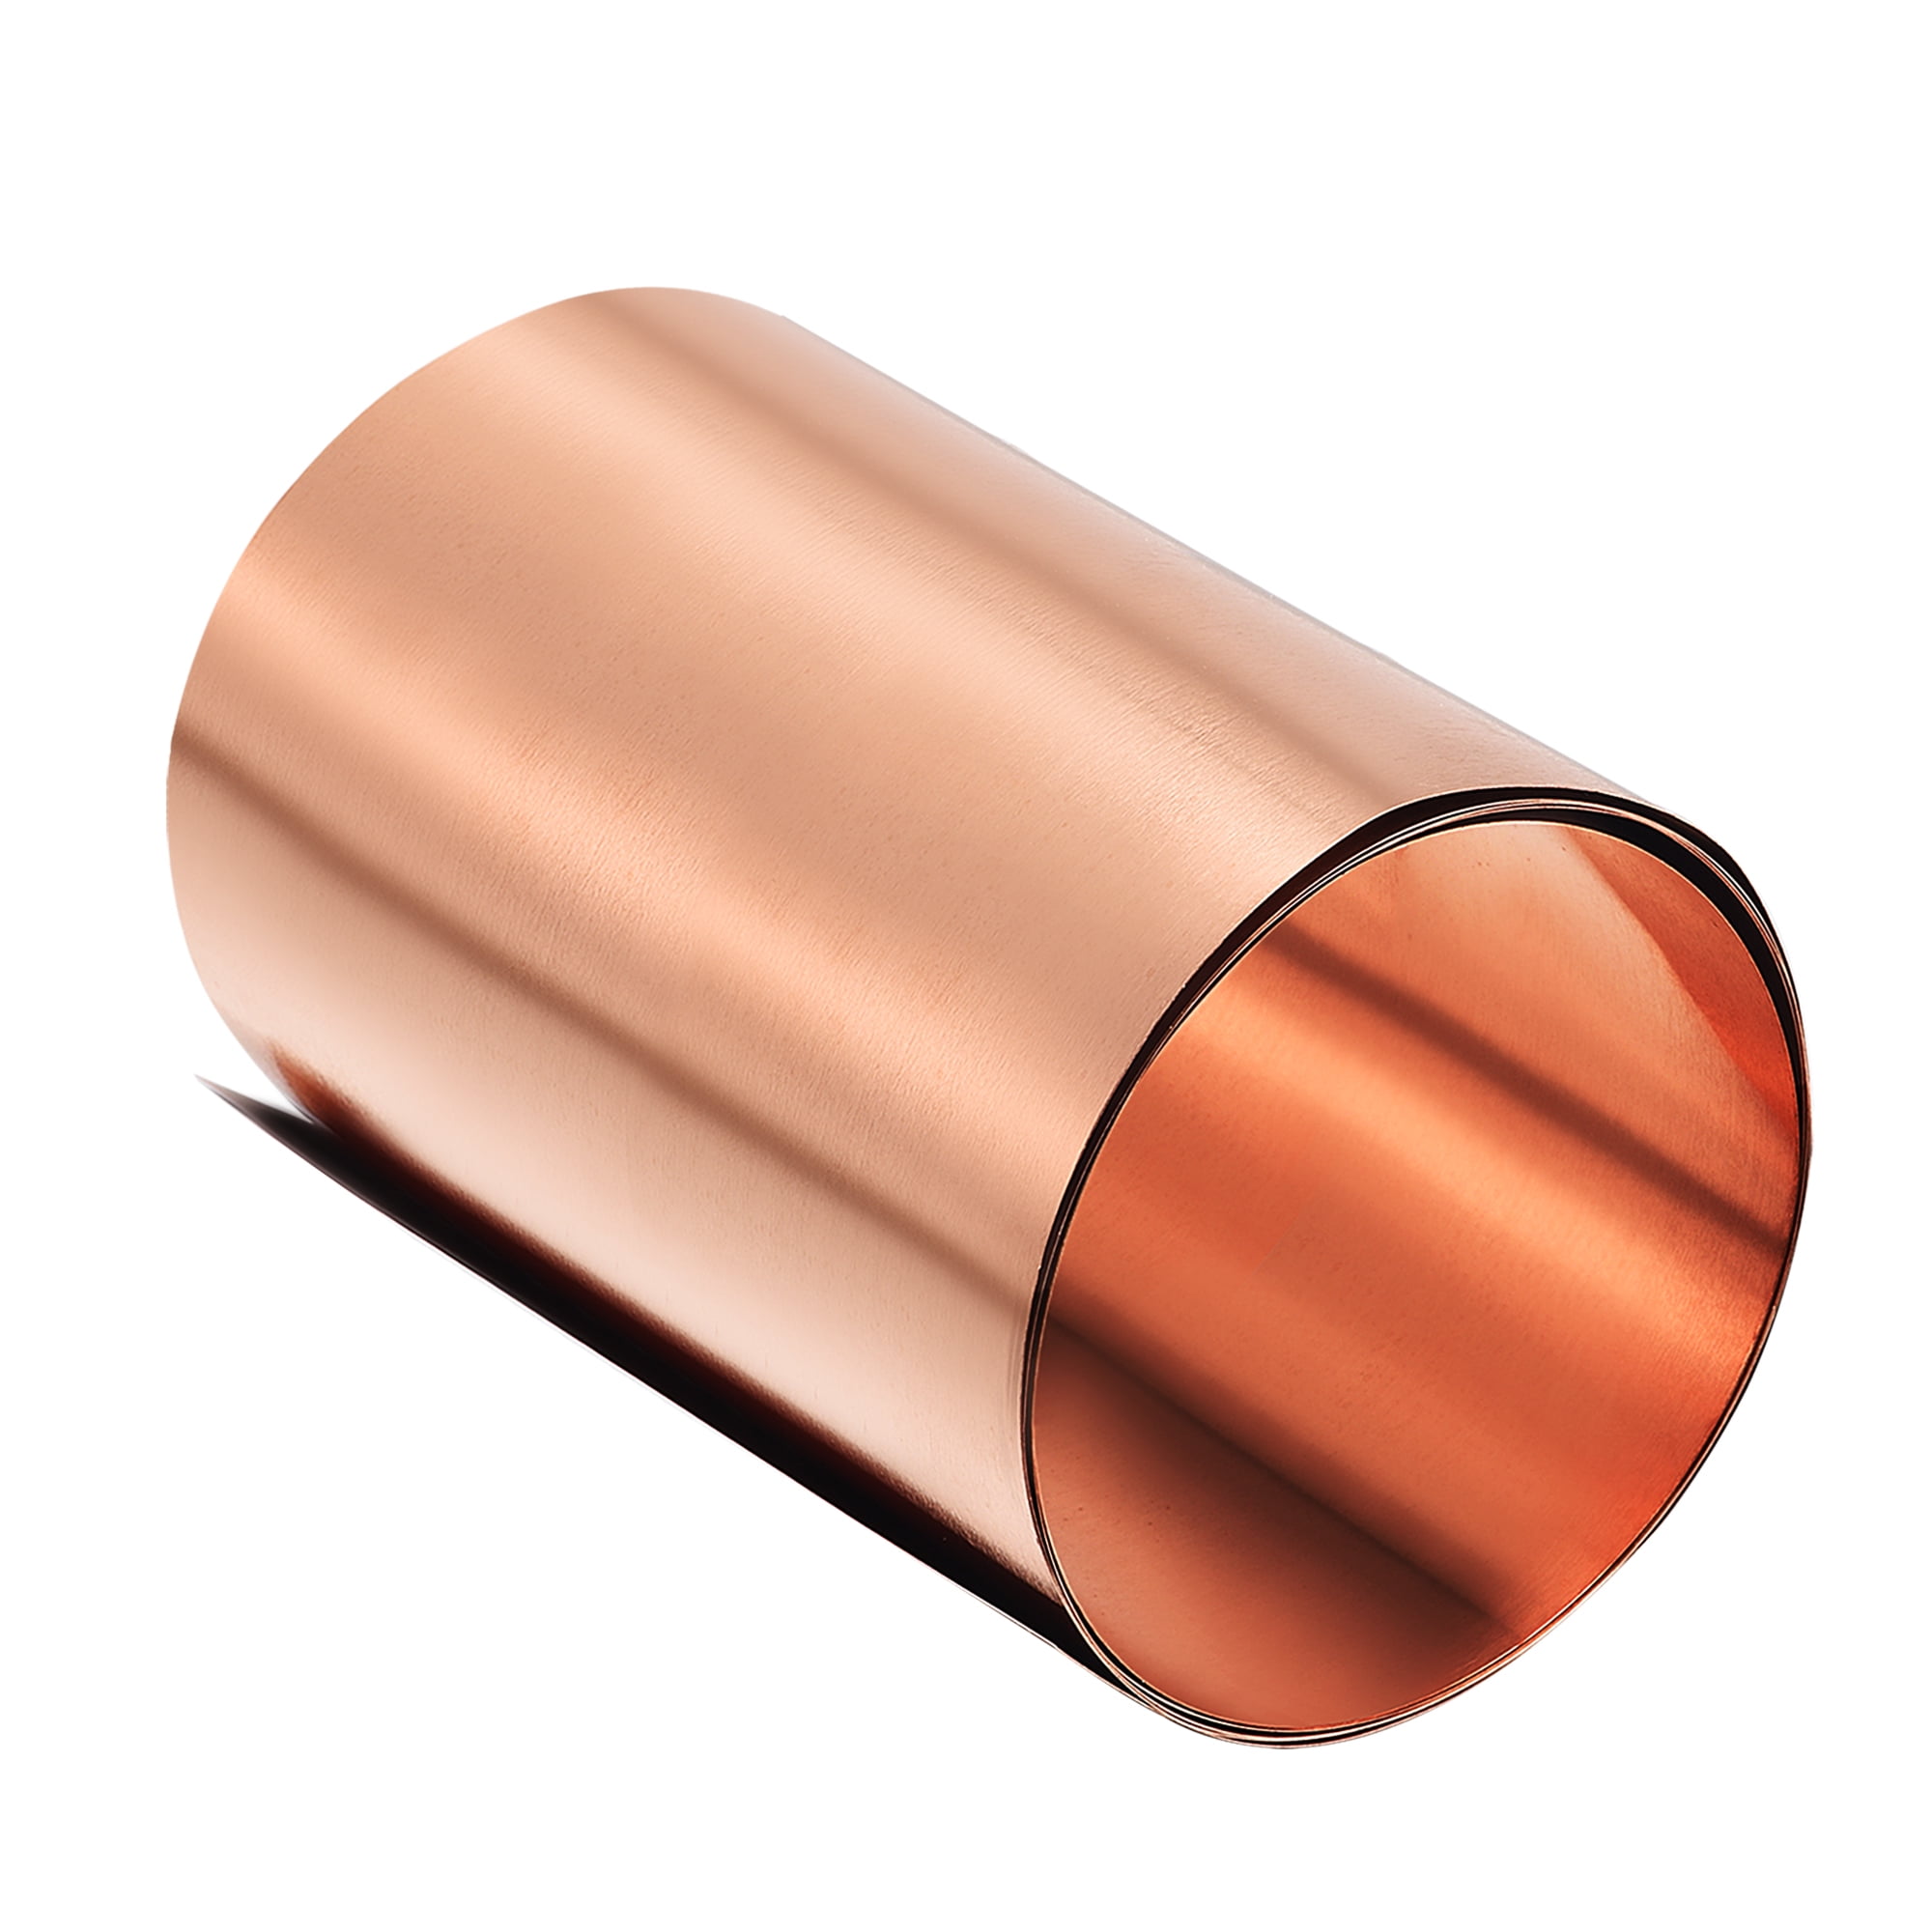 Thick*Length*Width 1pcs 99.9% Pure Copper Cu Metal Sheet Plate 2 x 50 x 50mm 